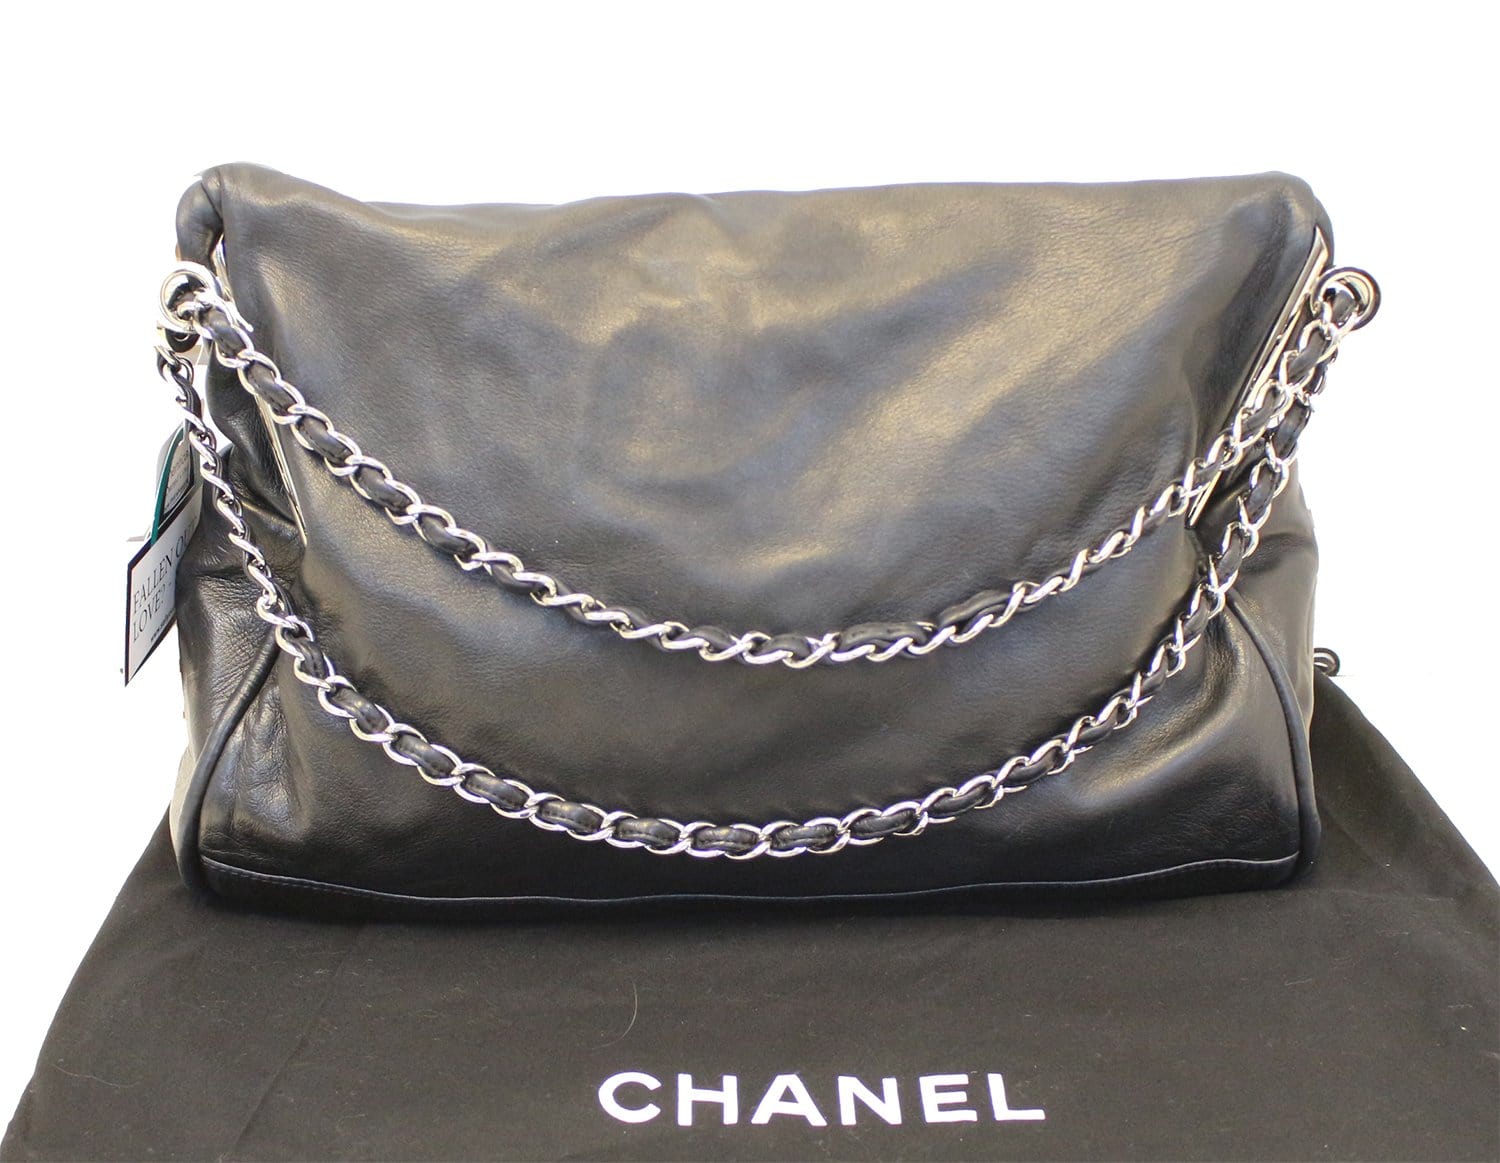 Chanel Soft Flap Shoulder Bag Limited edition chain